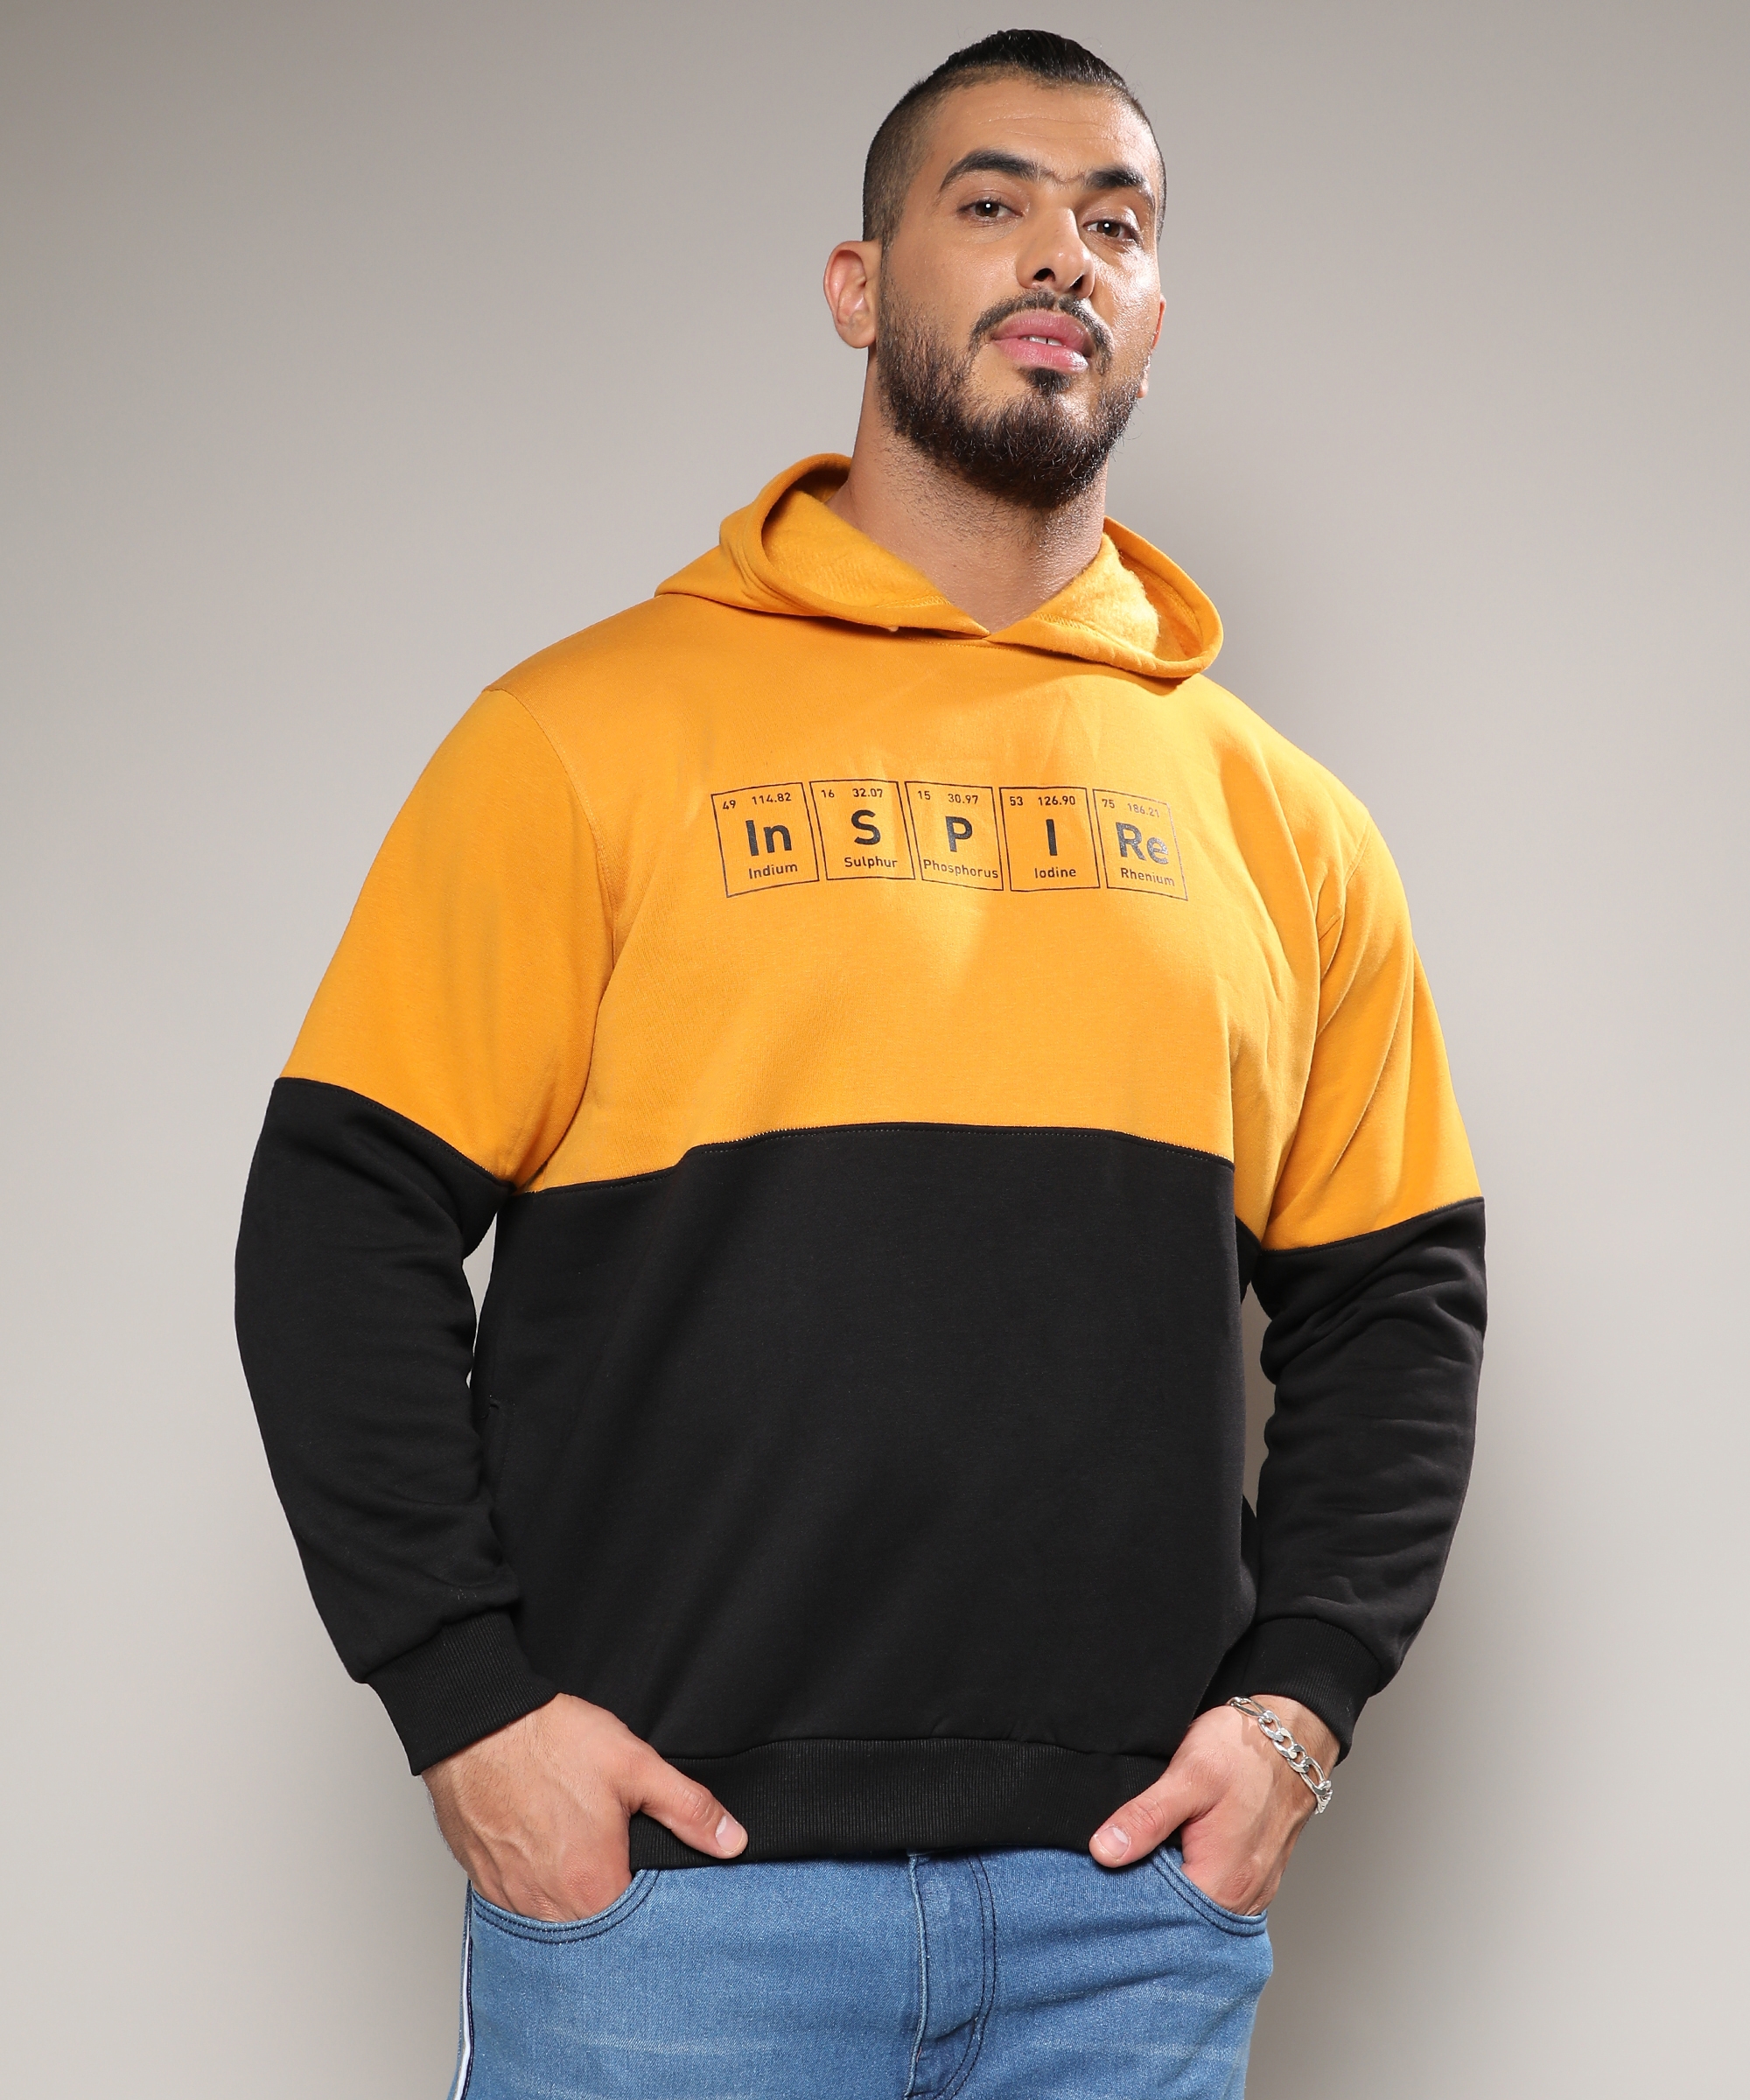 Men's Black & Mustard Yellow Inspire Hoodie With Kangaroo Pocket